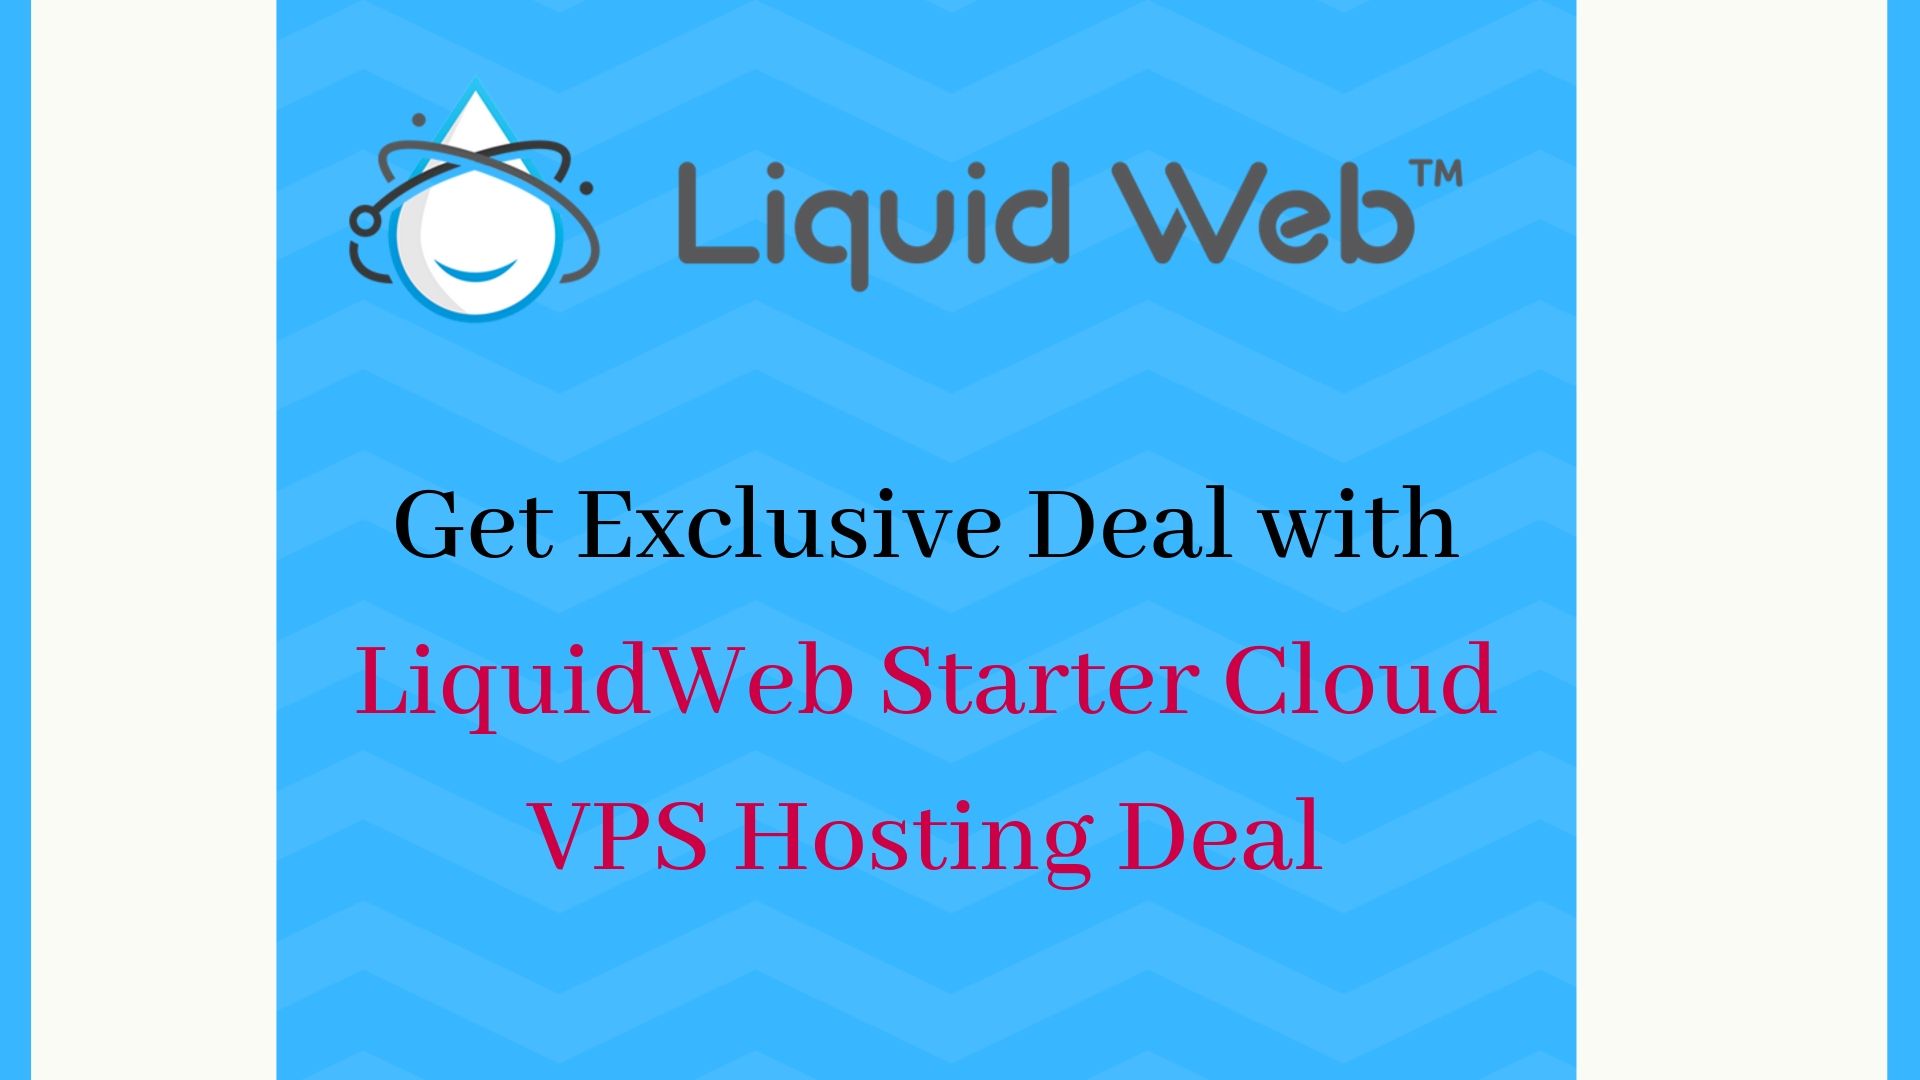 LiquidWeb Starter Cloud VPS Hosting Deal